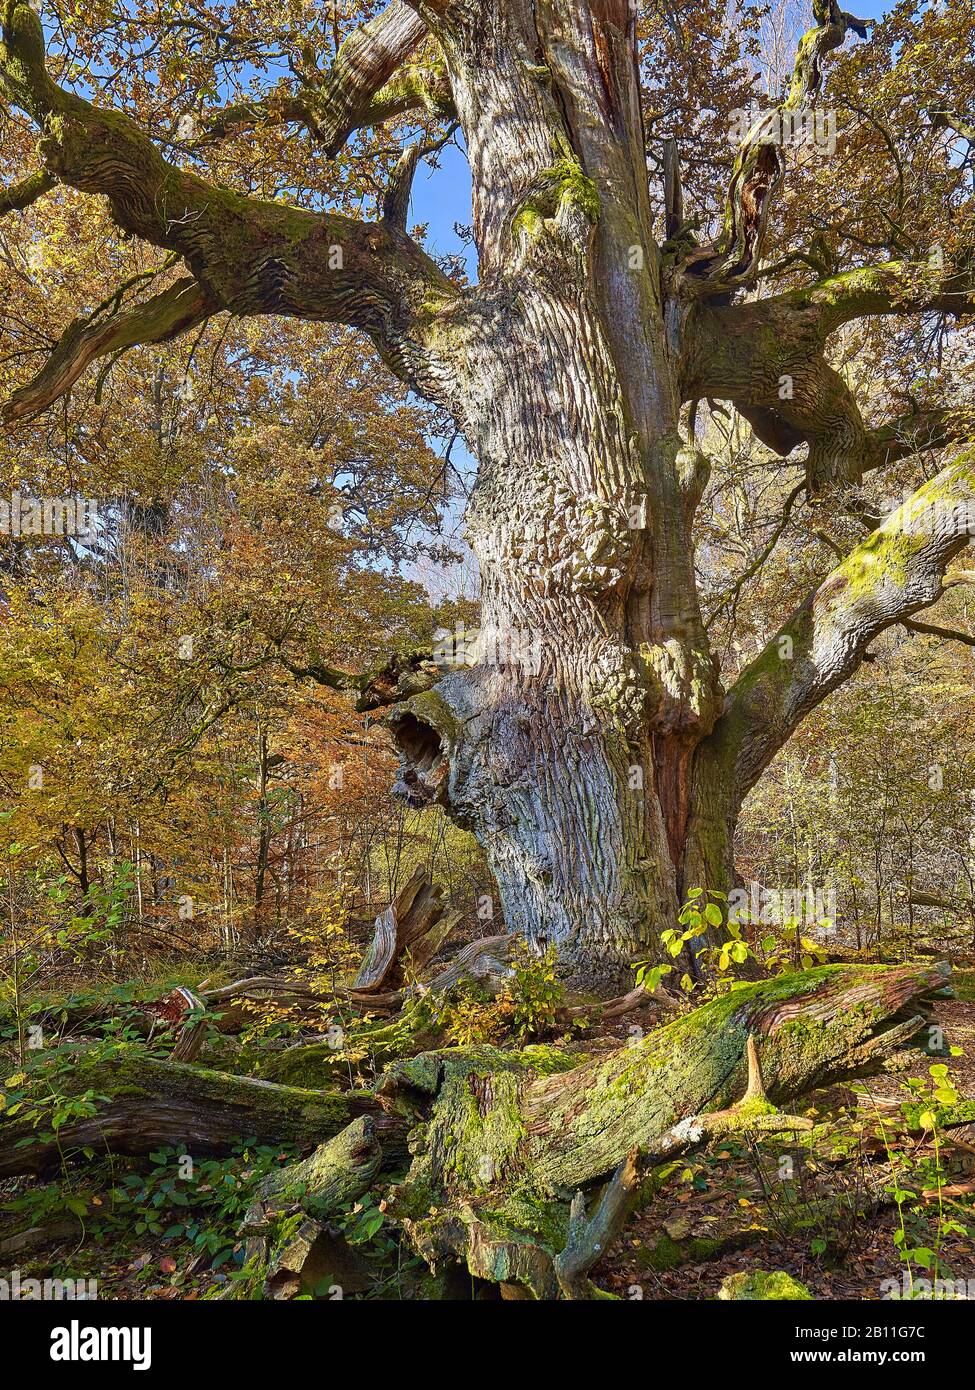 Chêne dans la réserve naturelle Urwald Sababurg, Hofgeismar, Hessen, Allemagne Banque D'Images